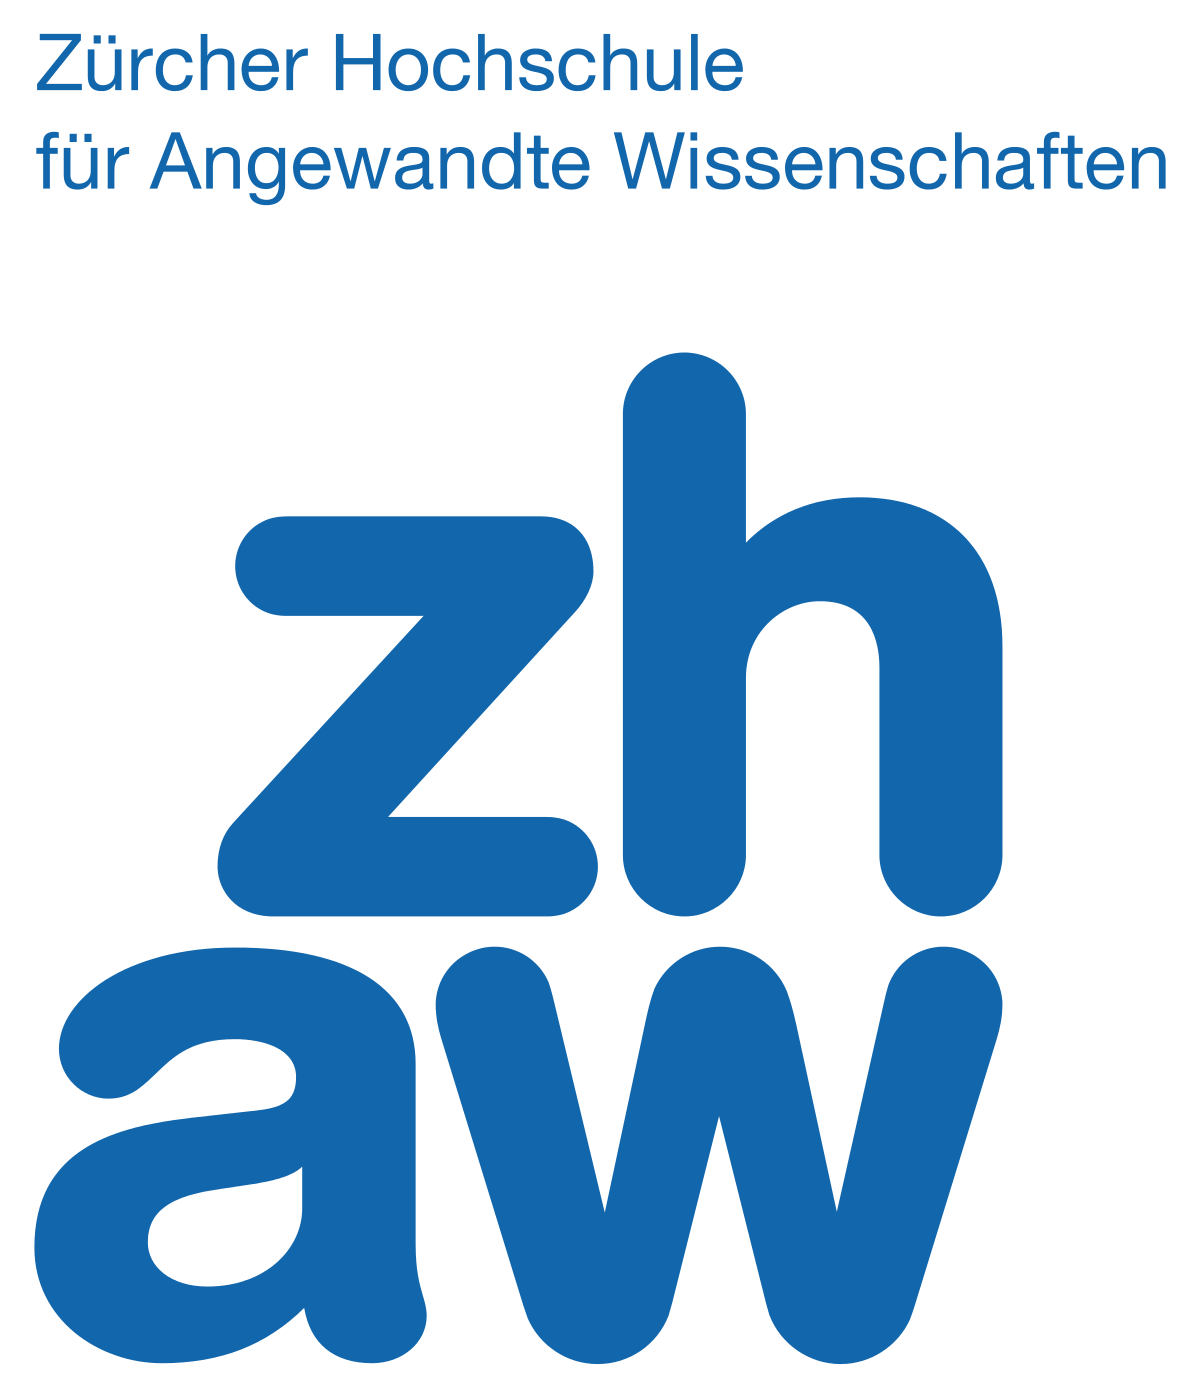 ZHAW_Logo.svg.png (0.1 MB)